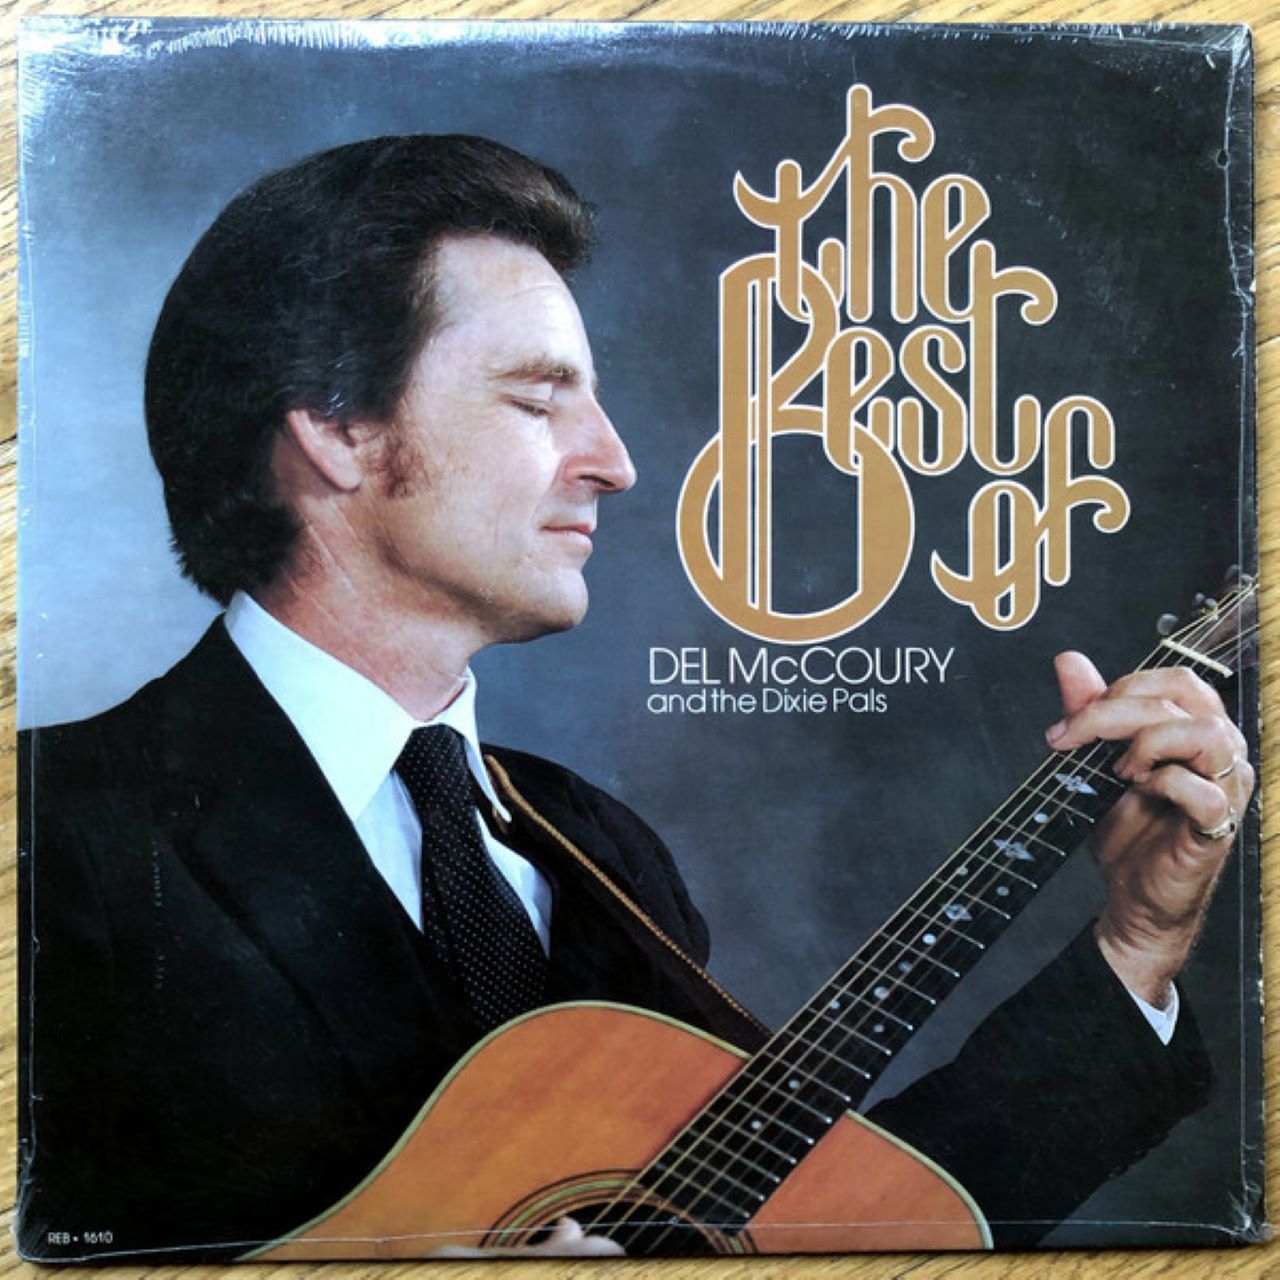 Del McCoury - The Best Of cover album